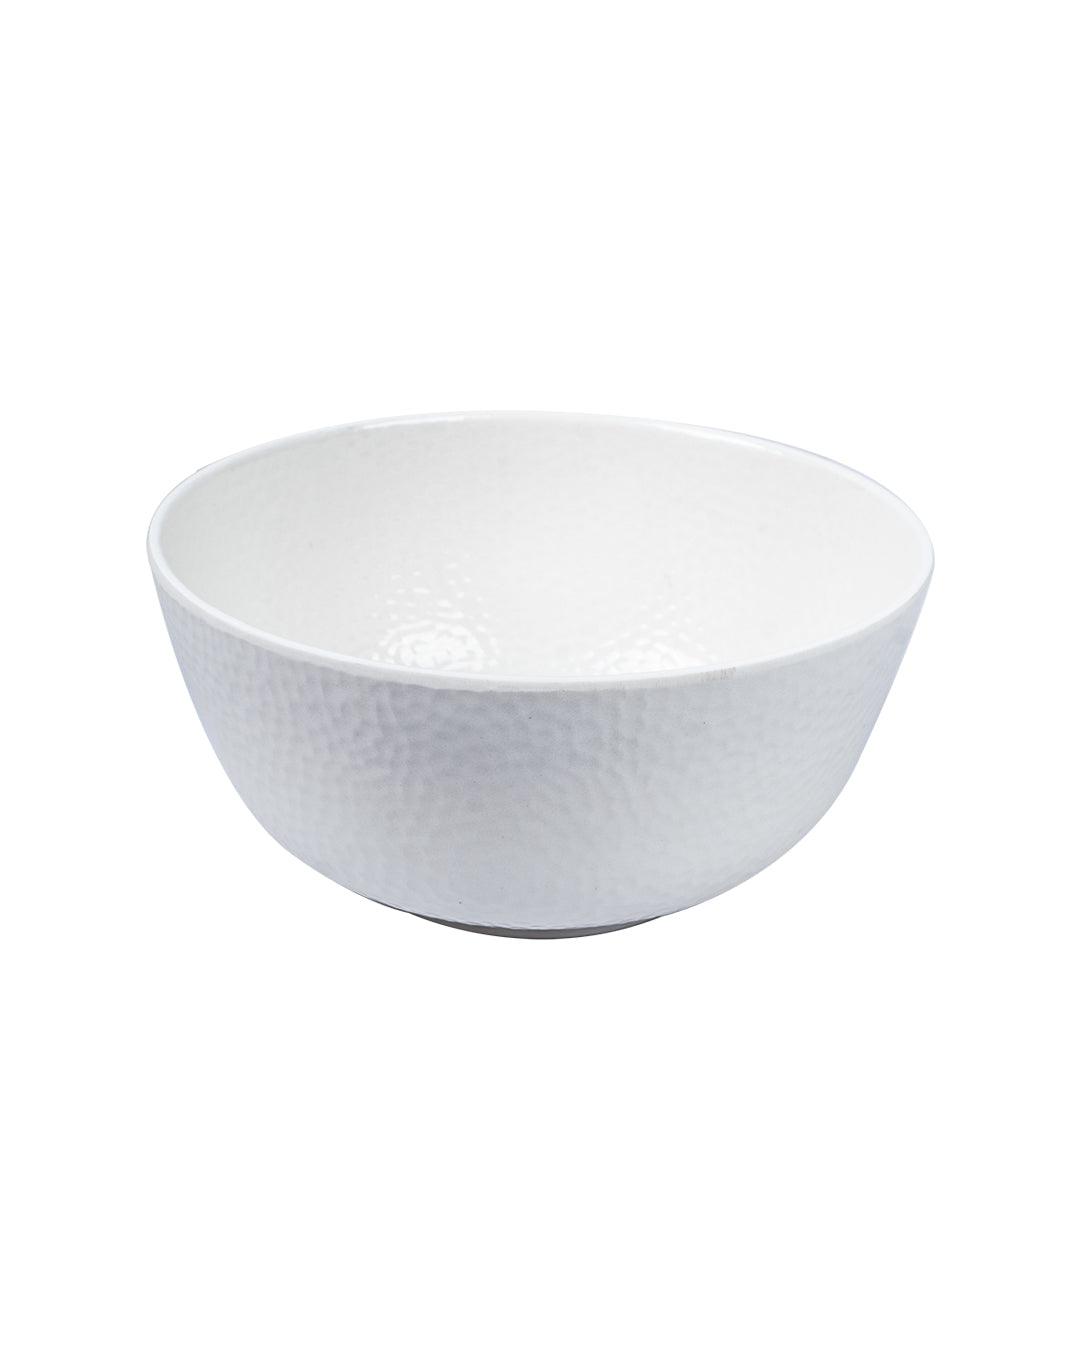 Market 99 Hammered Melamine Tableware White Glossy Finish Serving Bowls for Dining Table (Set Of 2, 1300 mL ) - MARKET 99